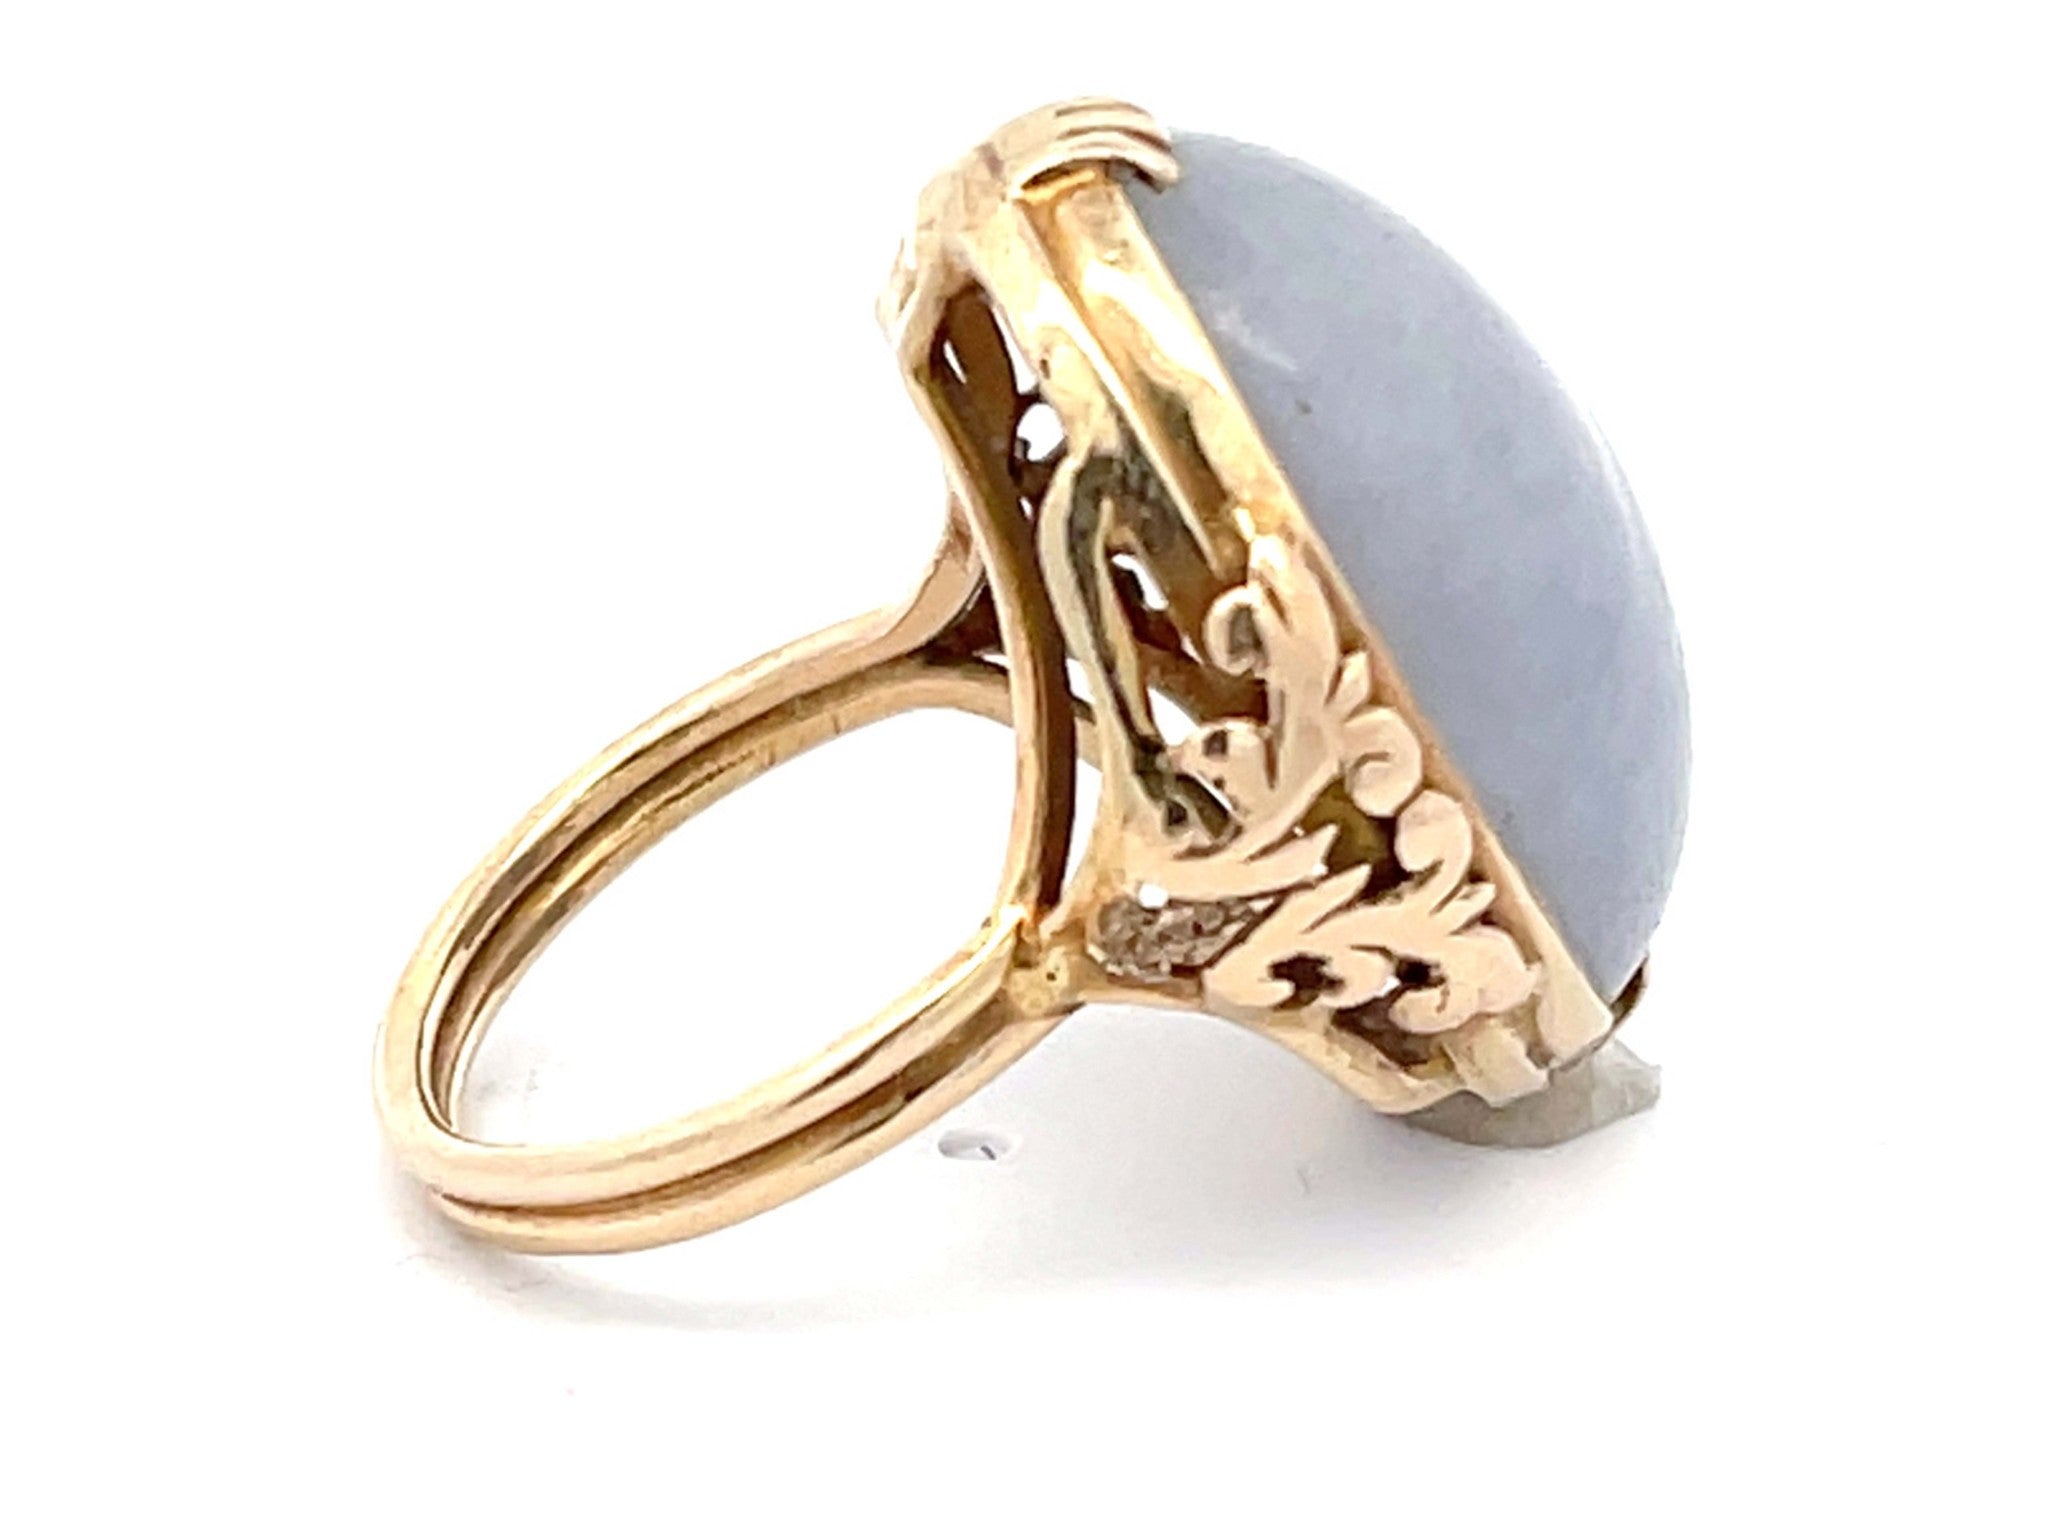 Mings Bluish Grey Oval Jade Ring in 14k Yellow Gold